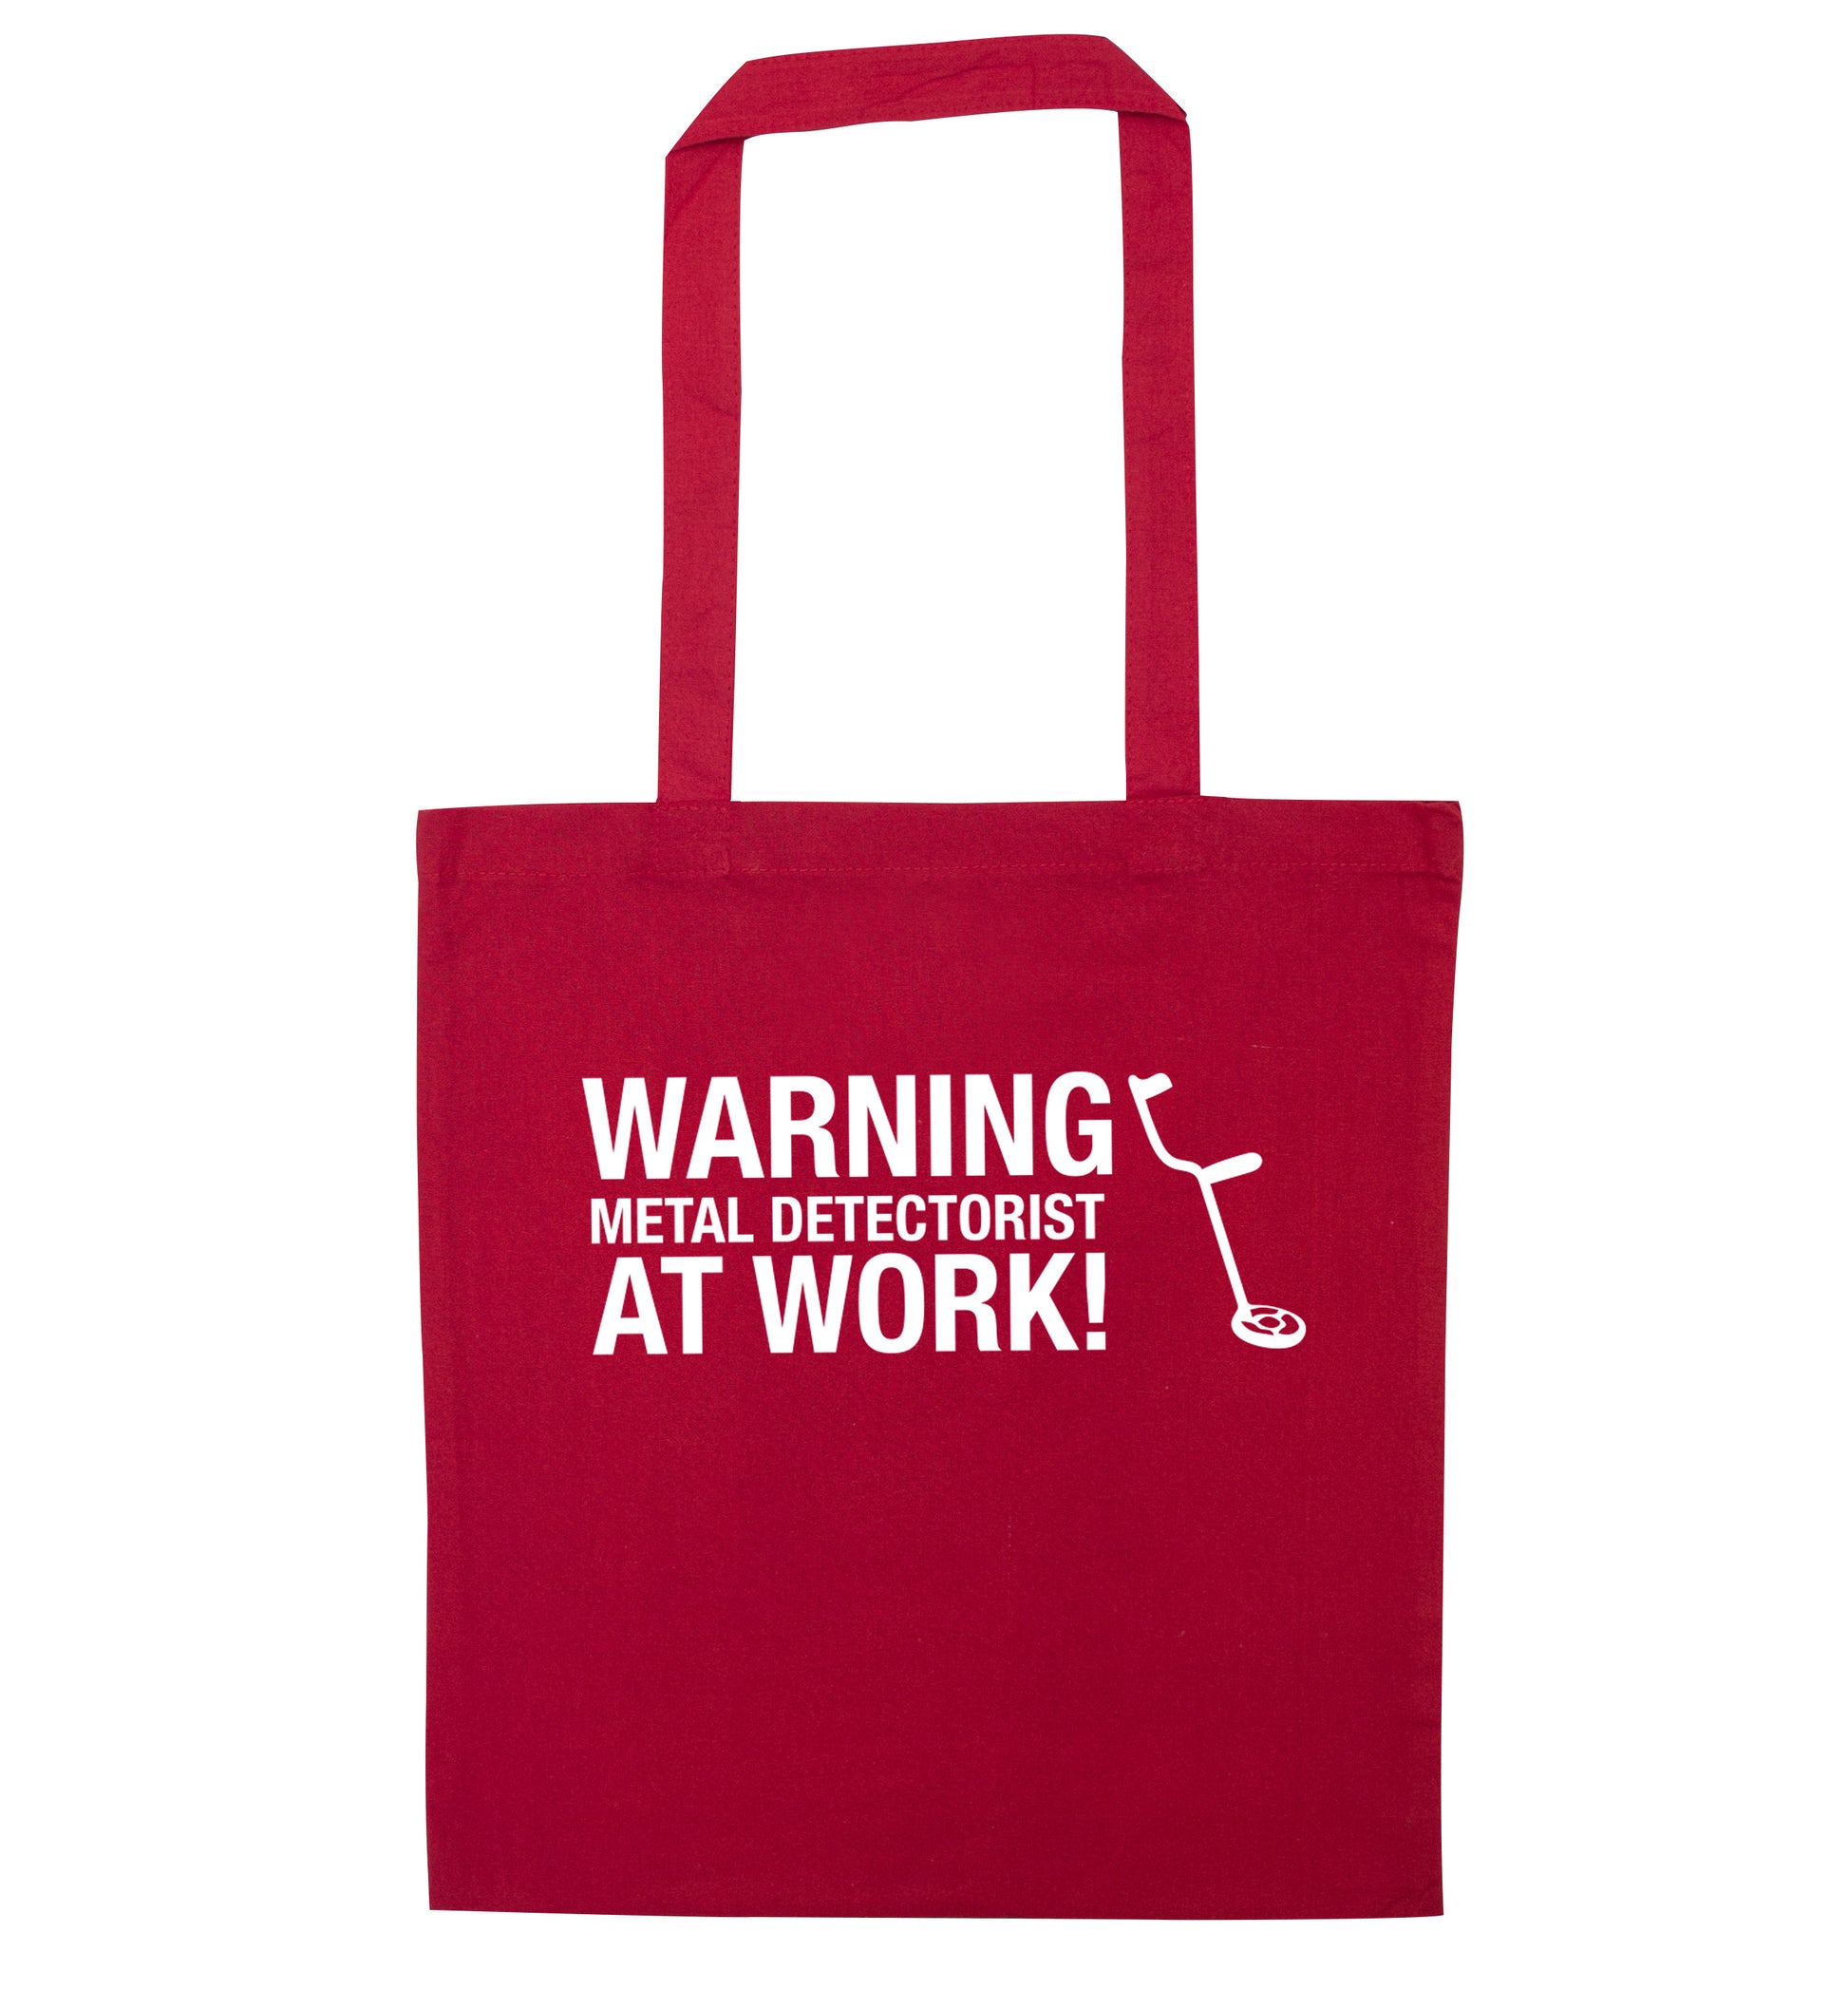 Warning metal detectorist at work! red tote bag